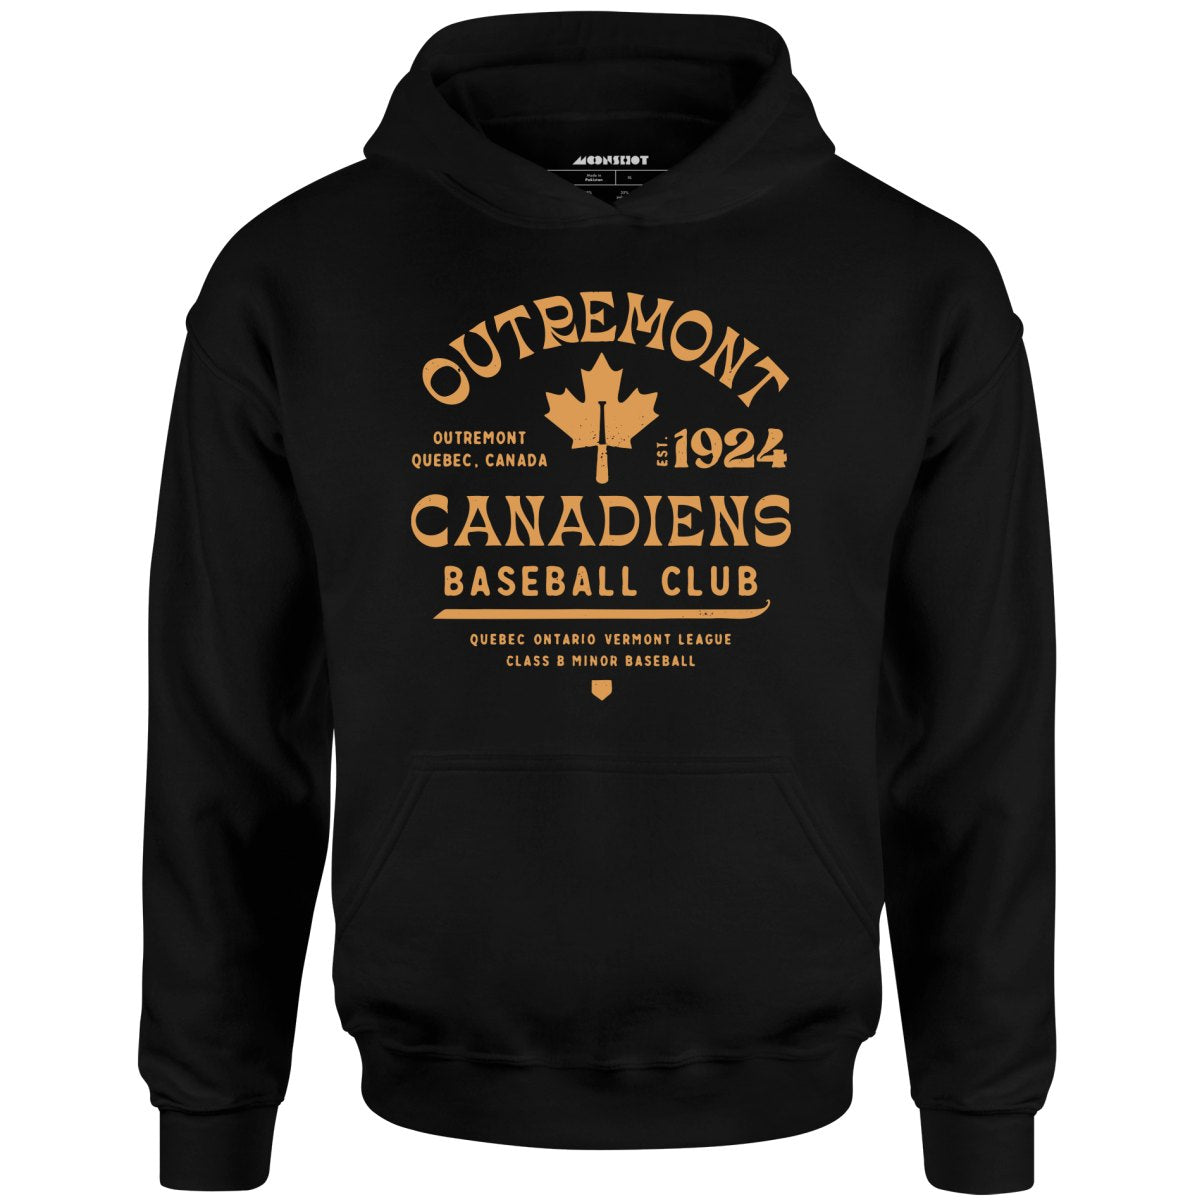 Outremont Canadiens - Canada - Vintage Defunct Baseball Teams - Unisex Hoodie